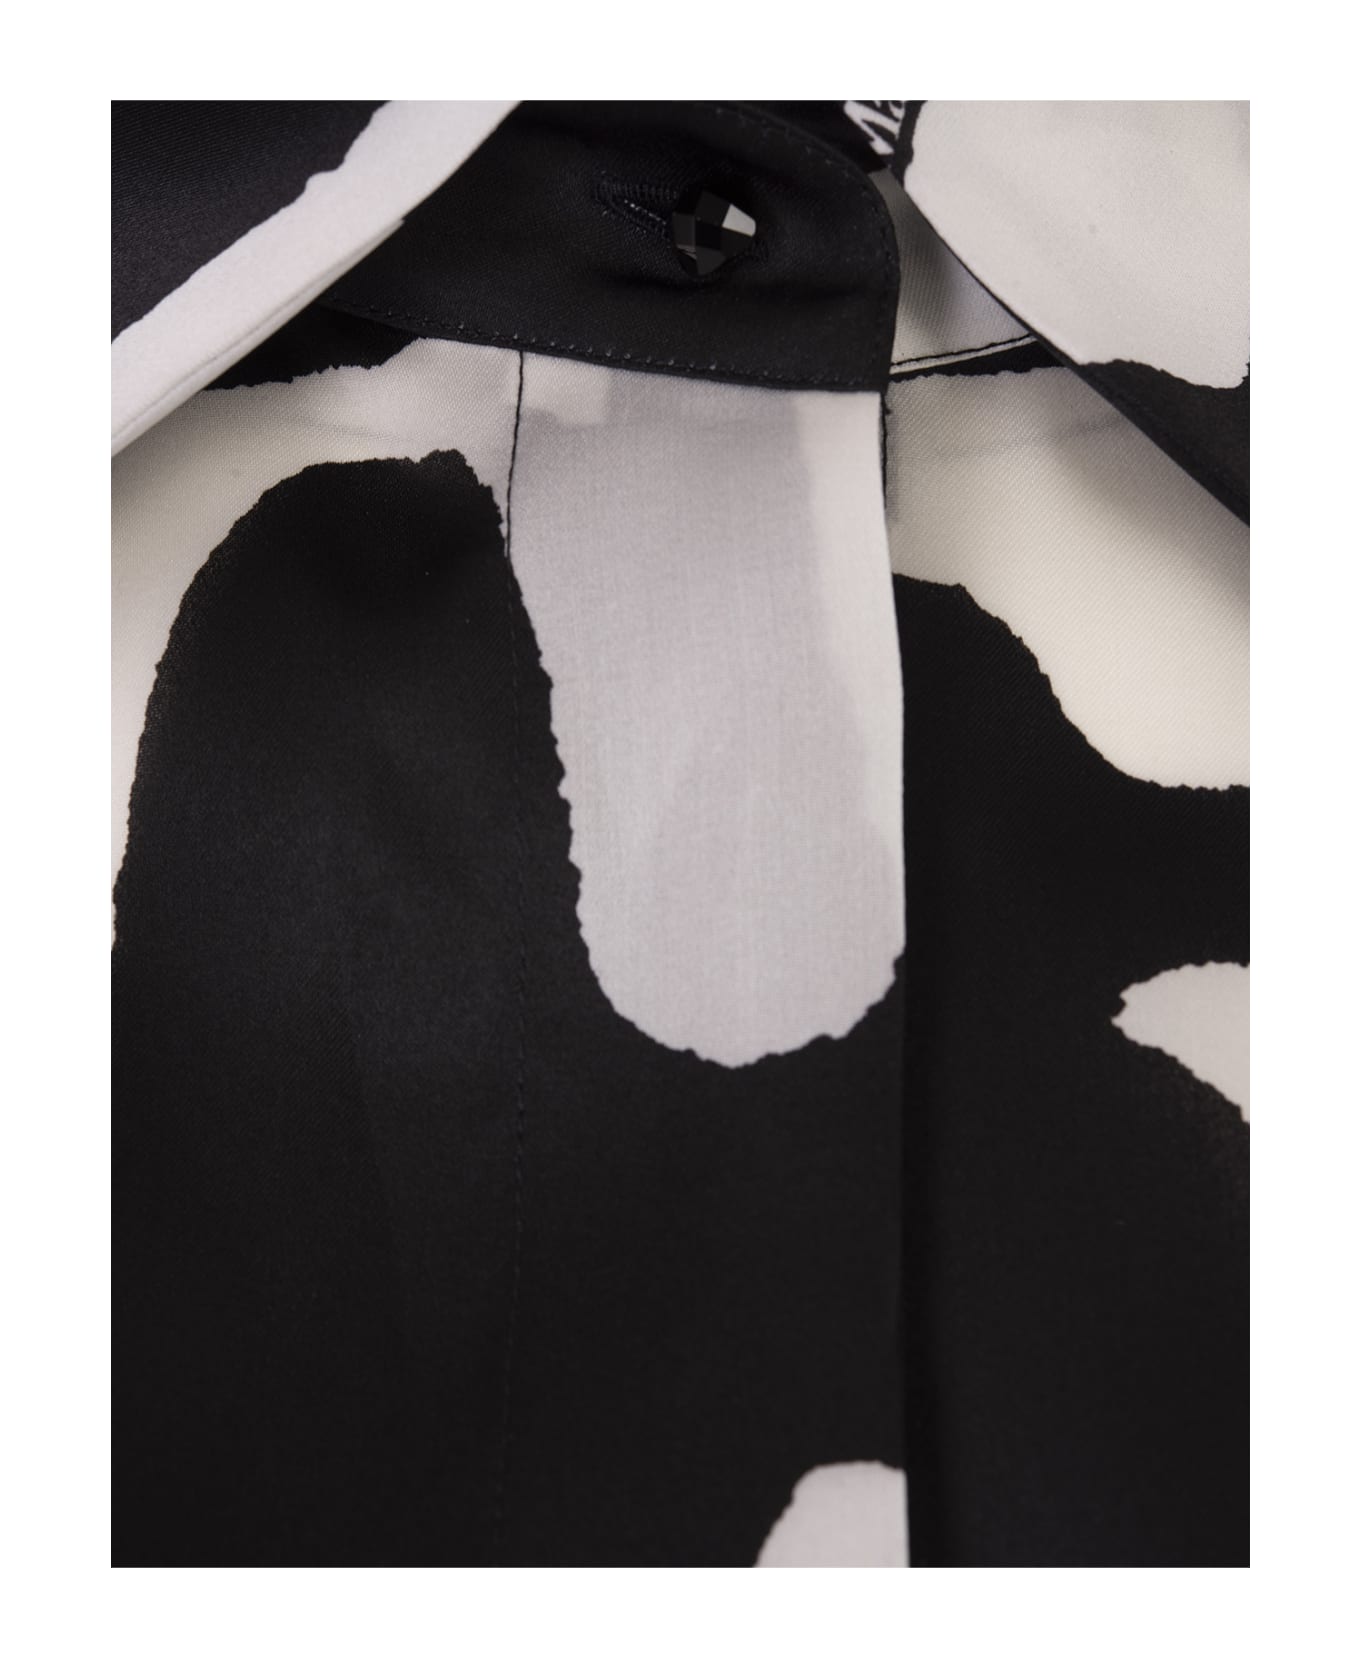 Max Mara Carella Shirt In White And Black - St. Grafica シャツ